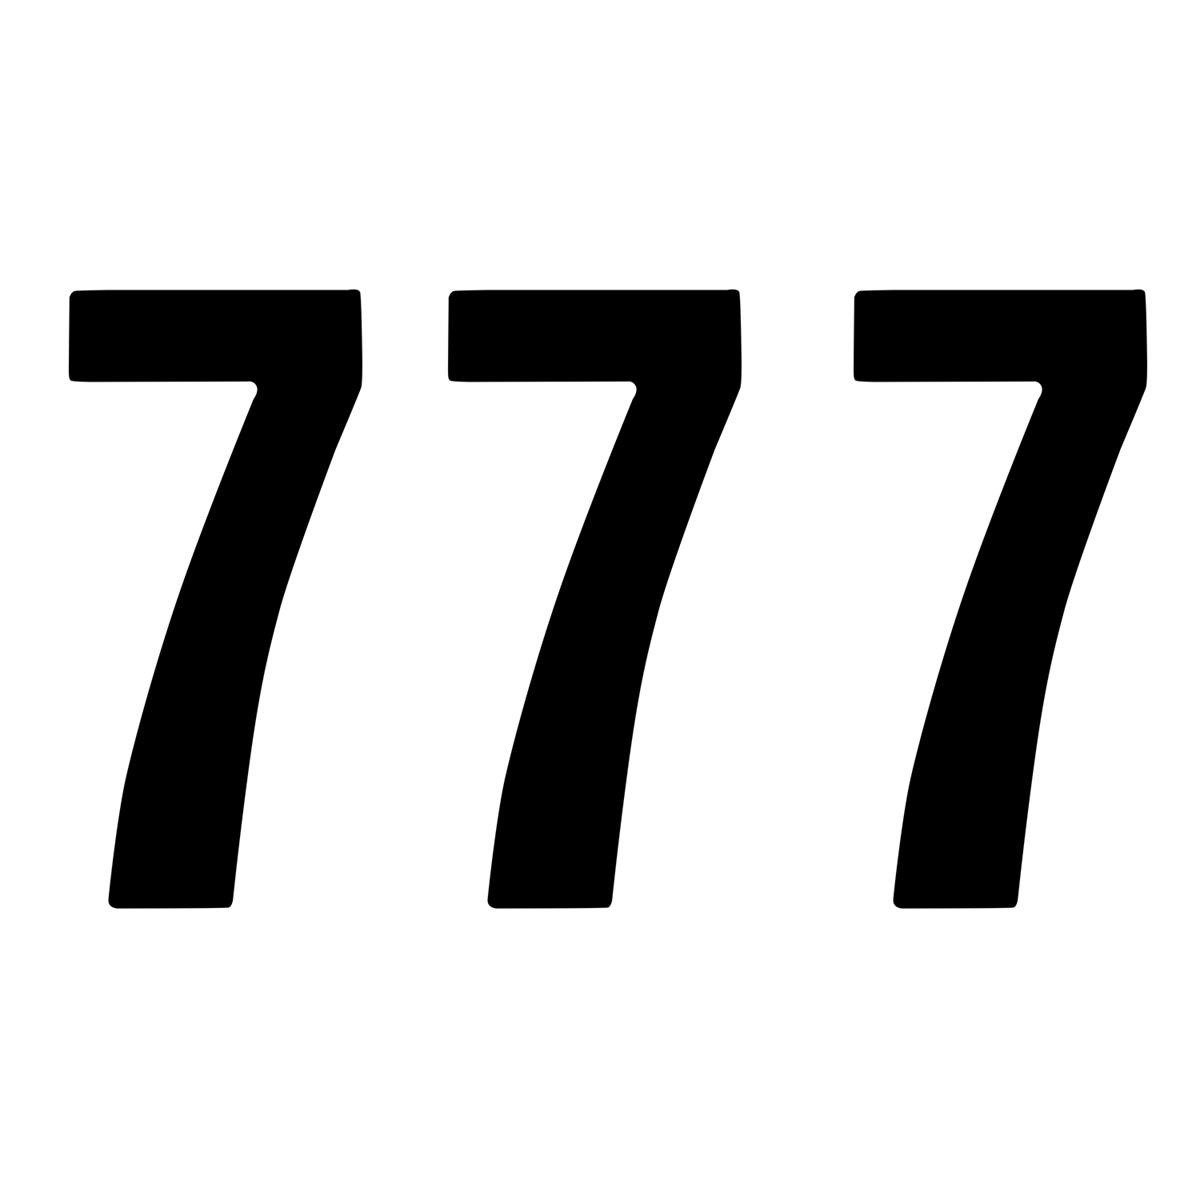 ZAP Kit Numeri Gara Racing Number 7, black, 17 cm, 3 pieces